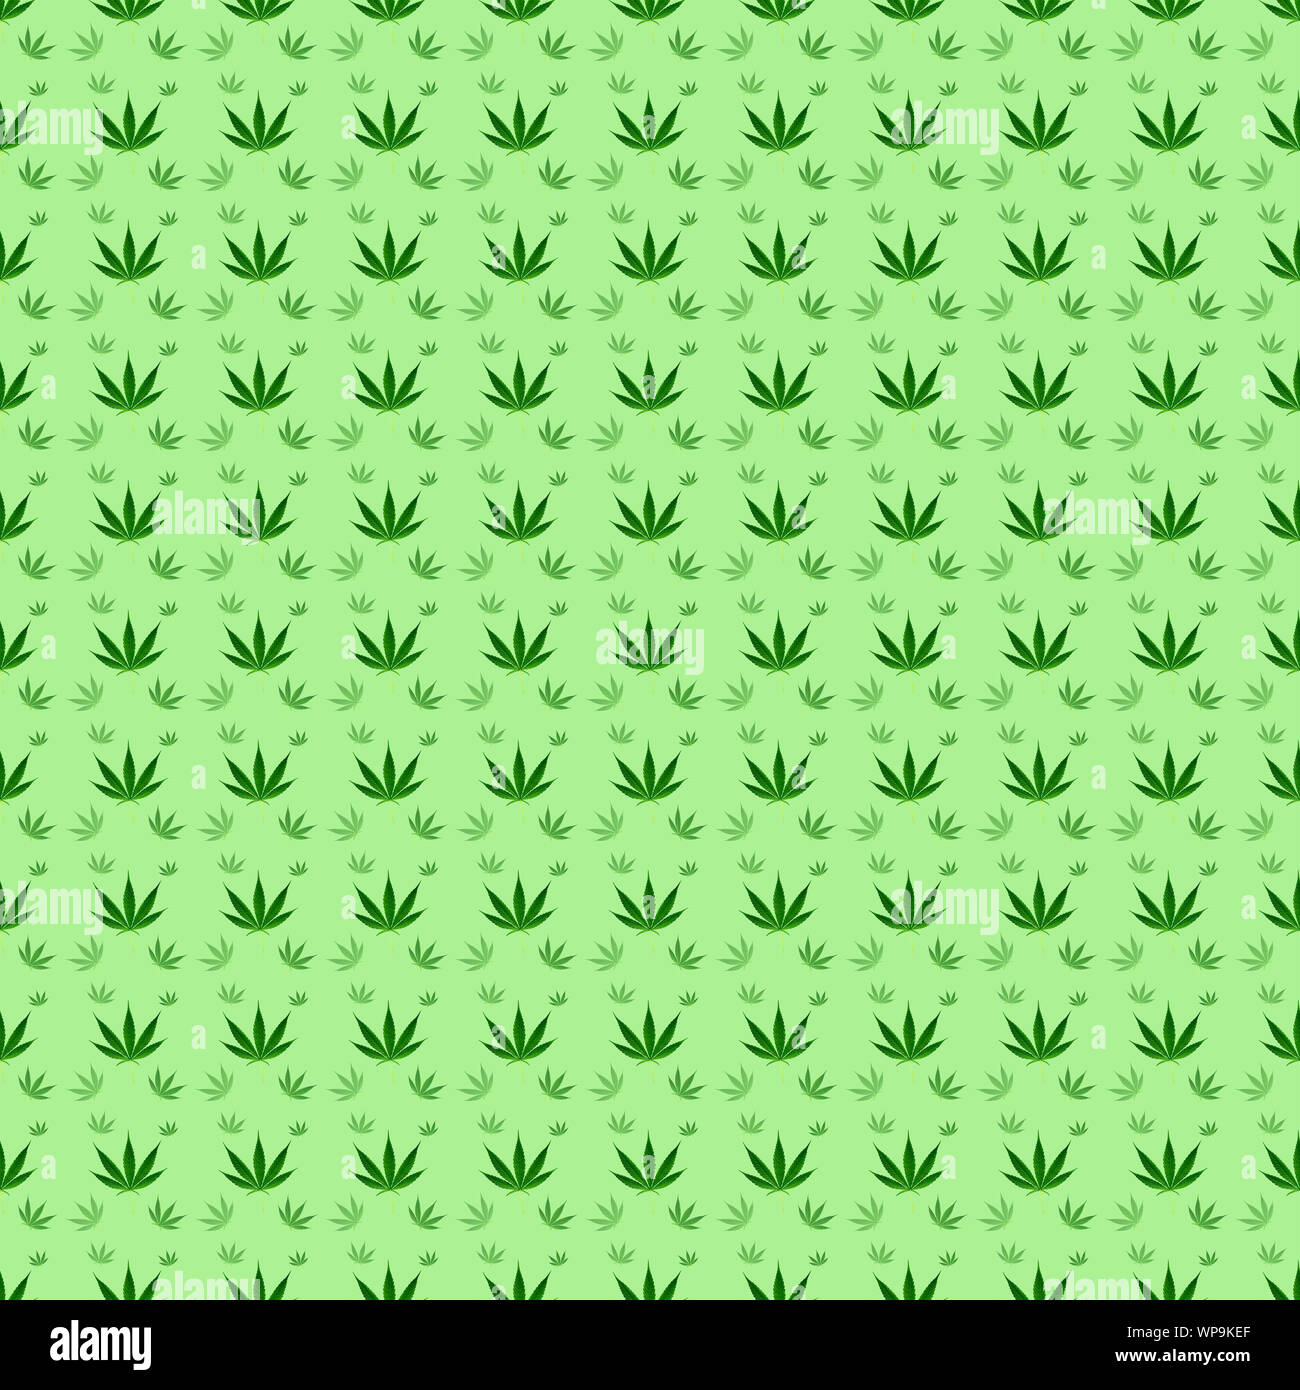 marijuana or cannabis leaves seamless background pattern Stock Photo